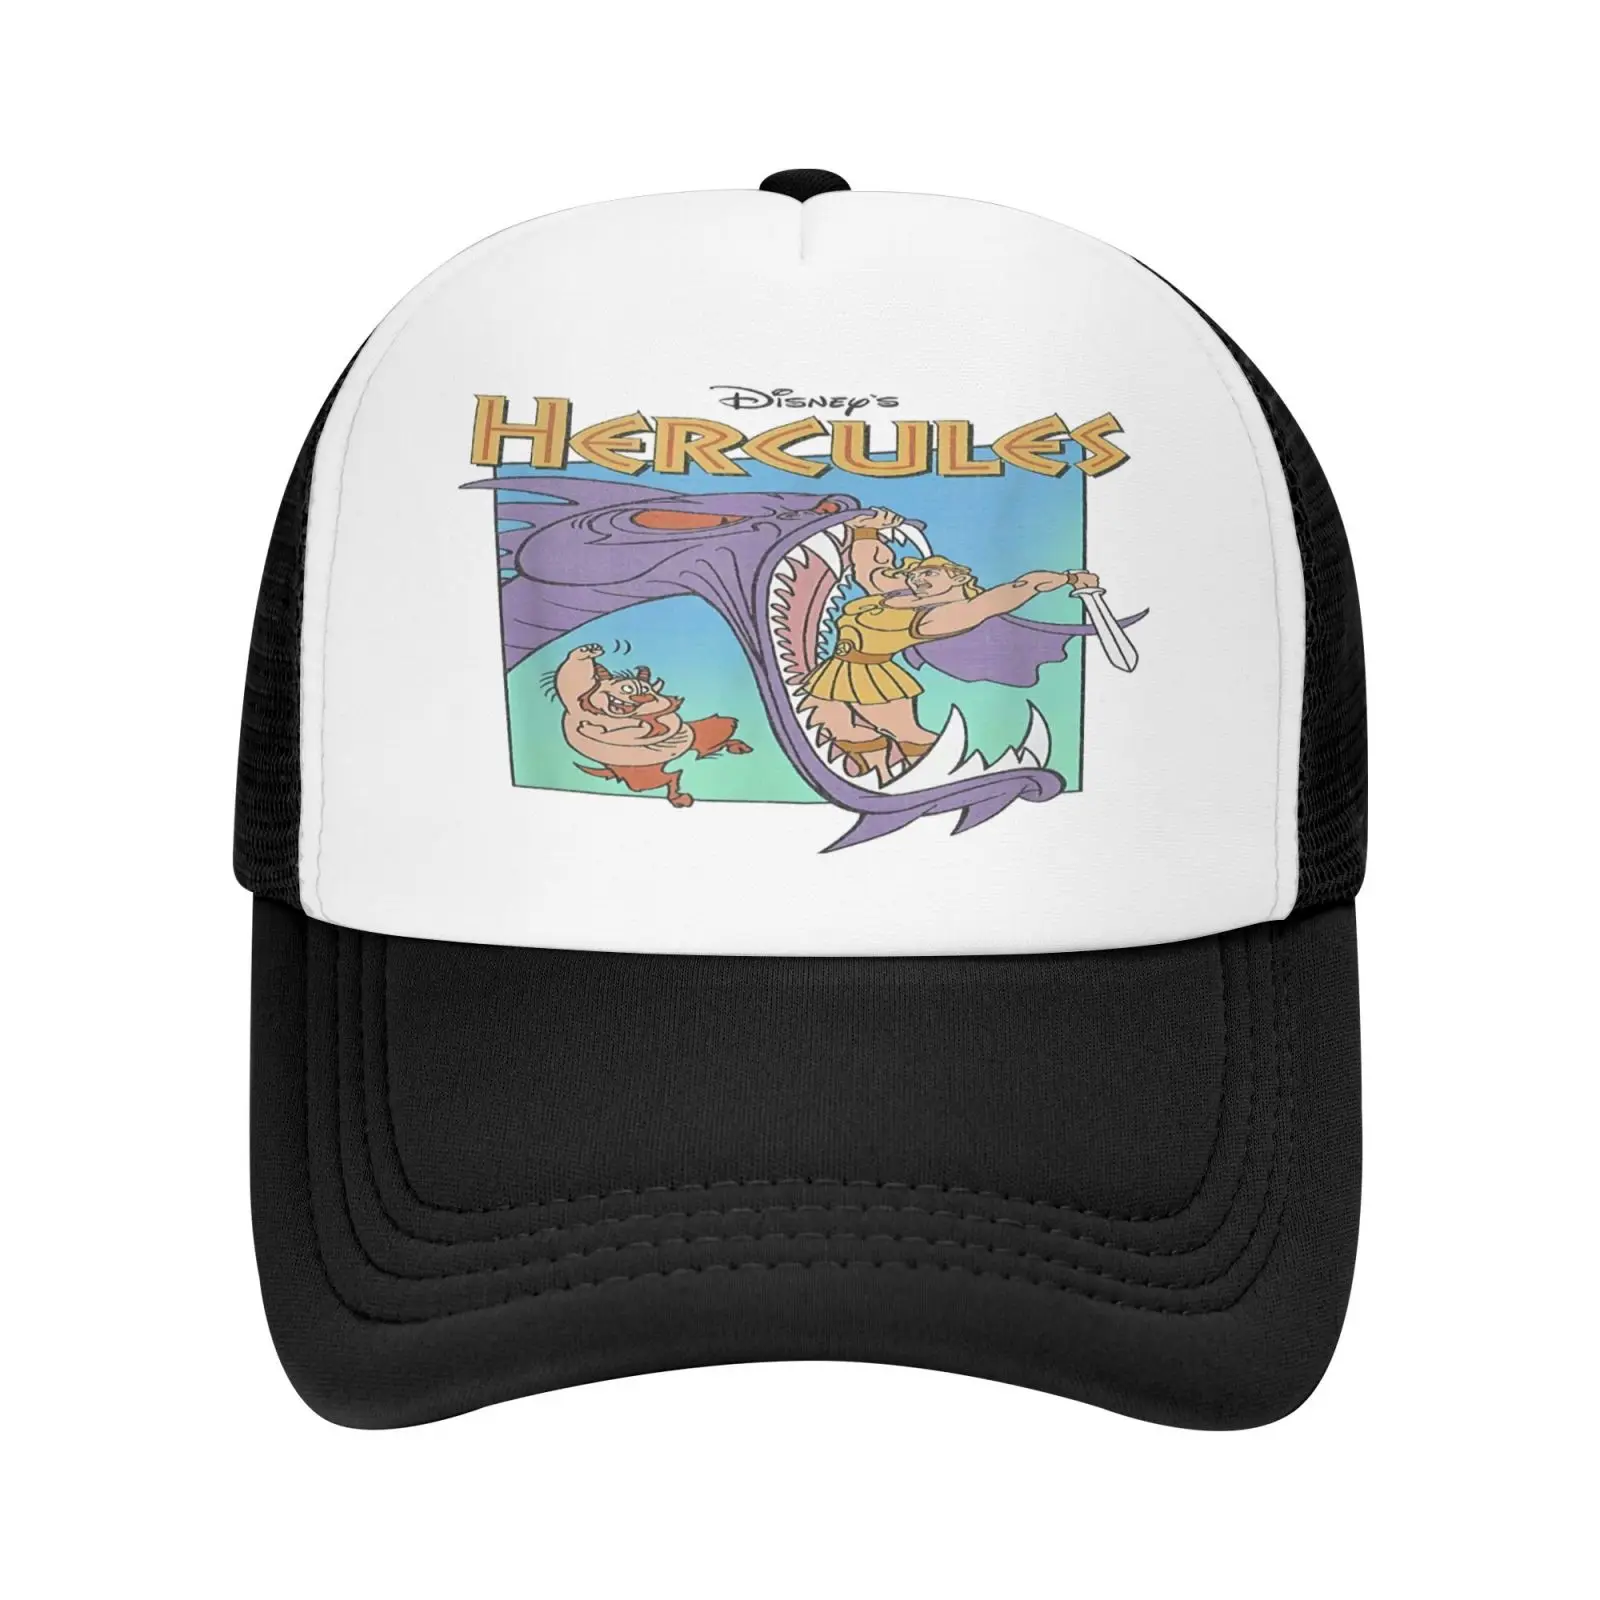 

Hercules Hydra Battle Graphic Кепка для мужчин, мужская кепка, бейсболка s, шапки в стиле хип-хоп, Панама, шапка, облегающая Кепка s, хип-хоп Панама